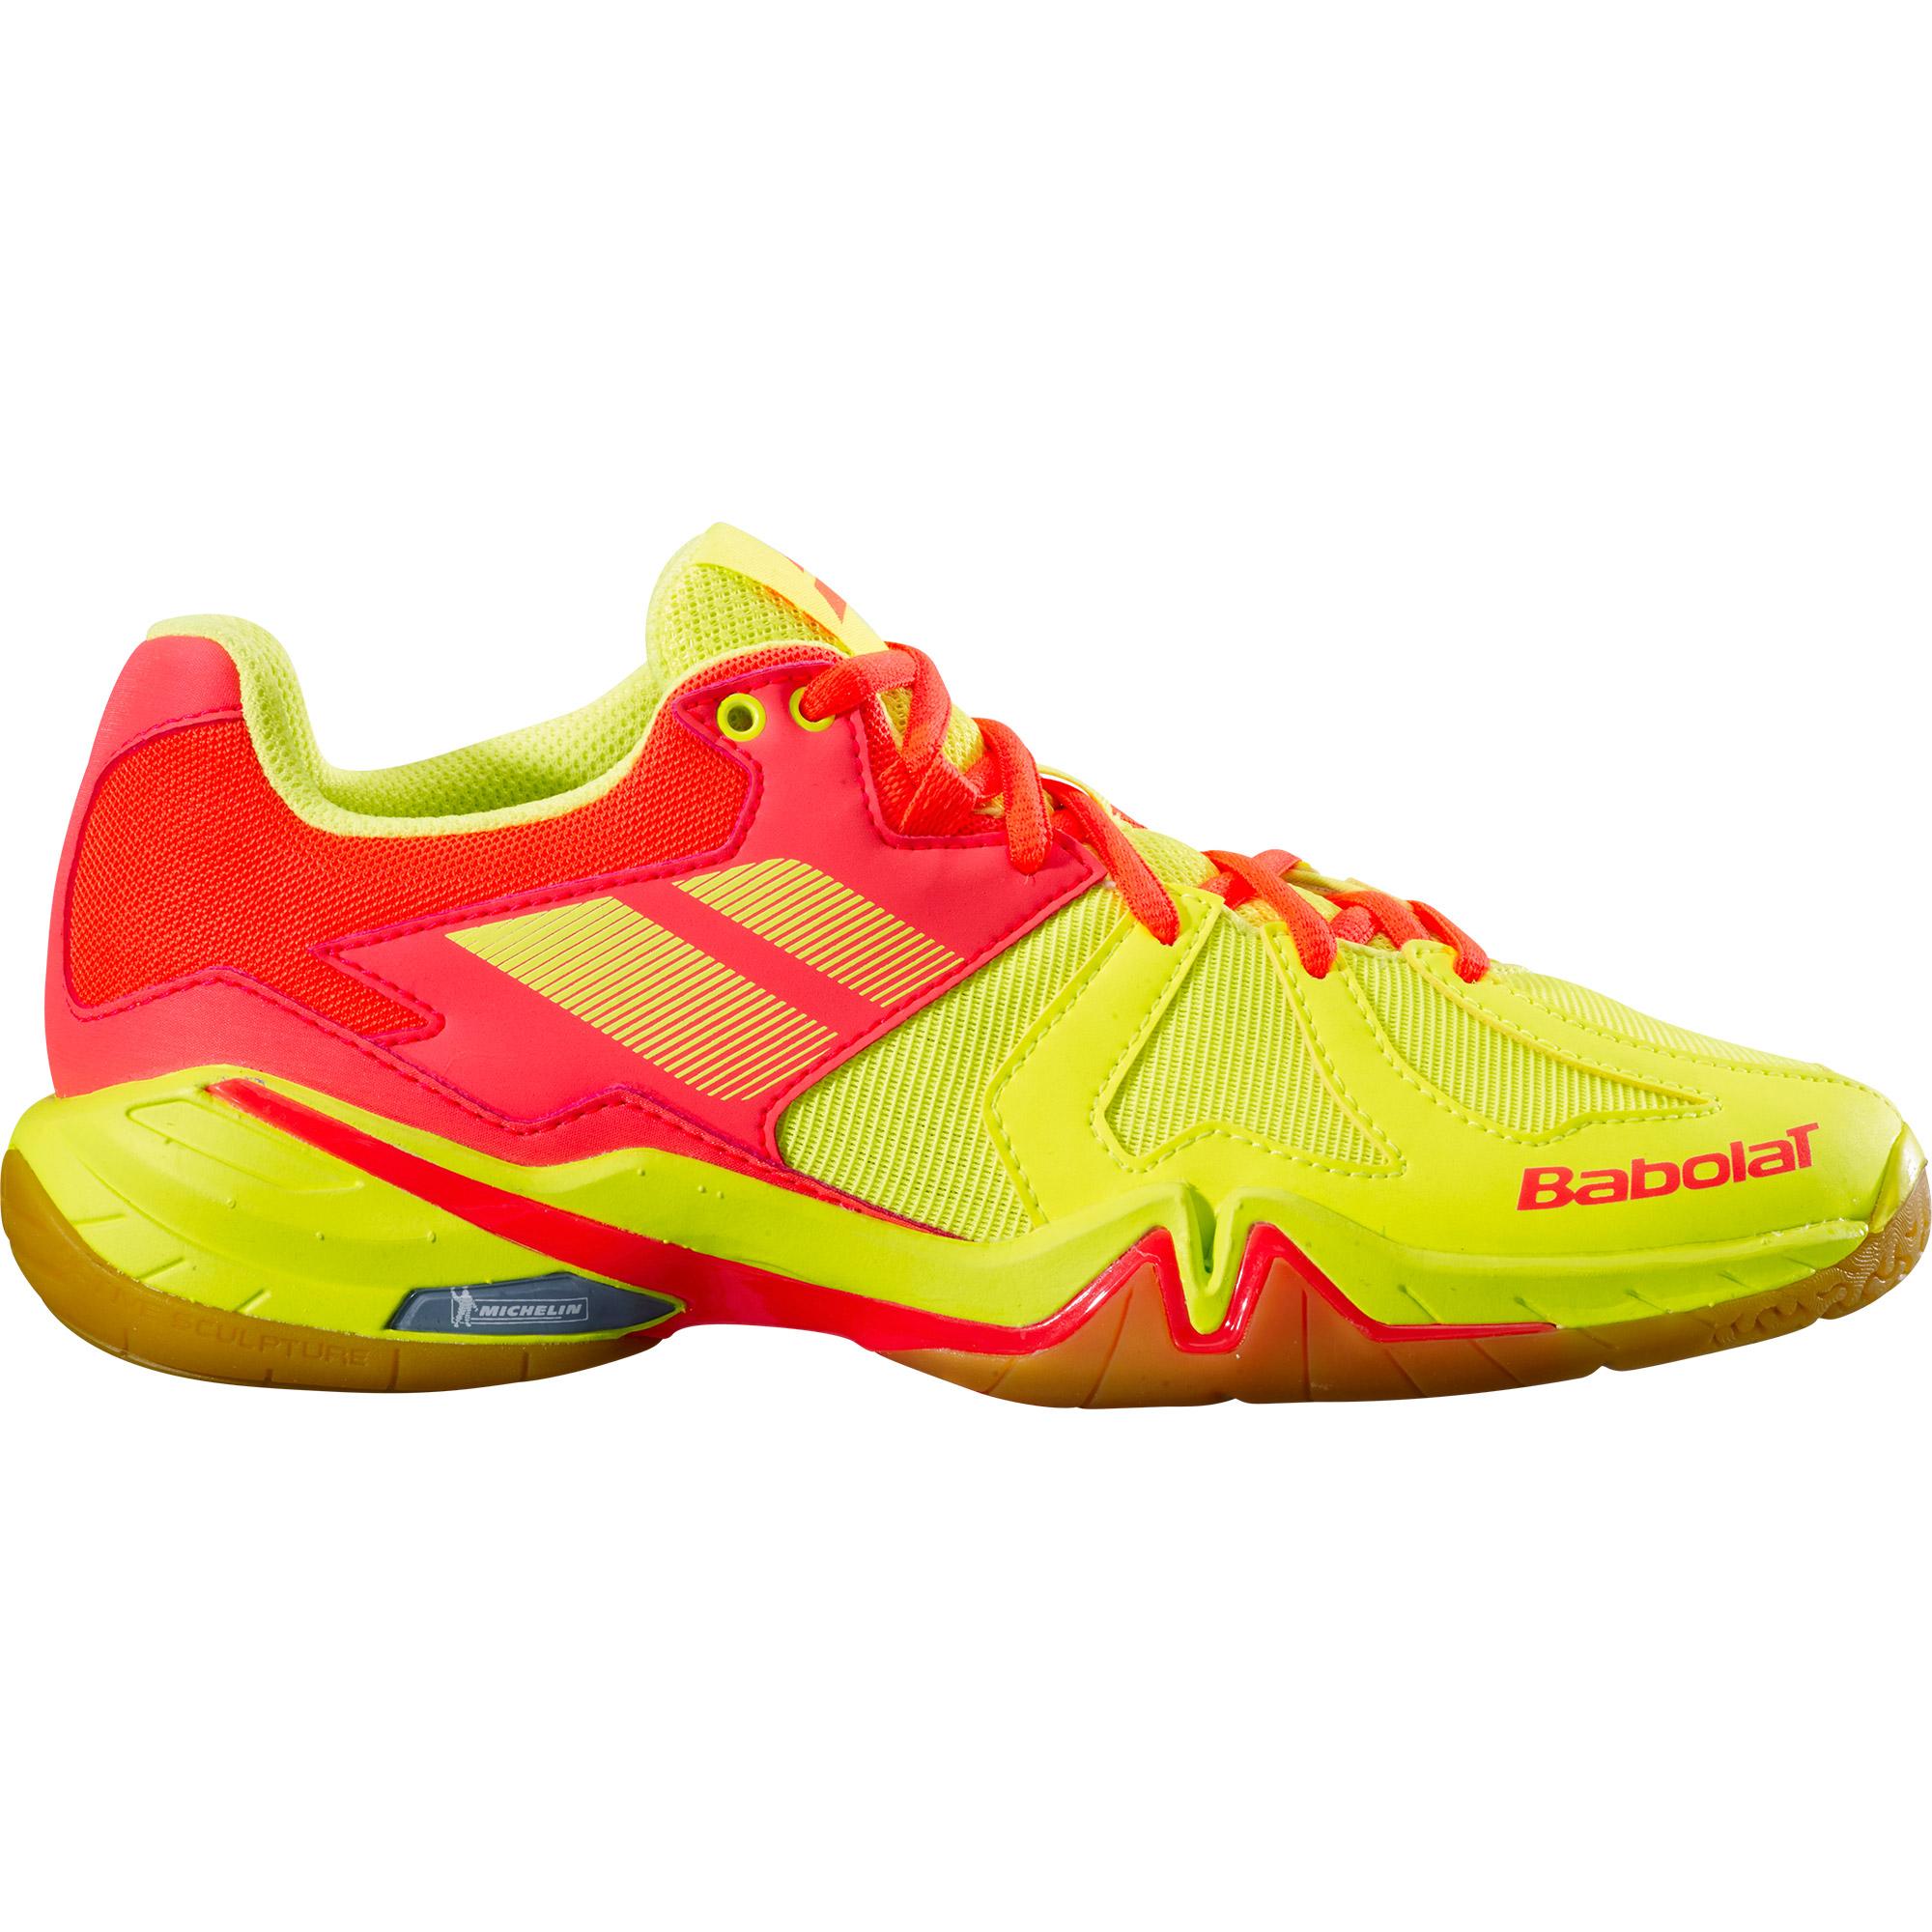 yellow badminton shoes